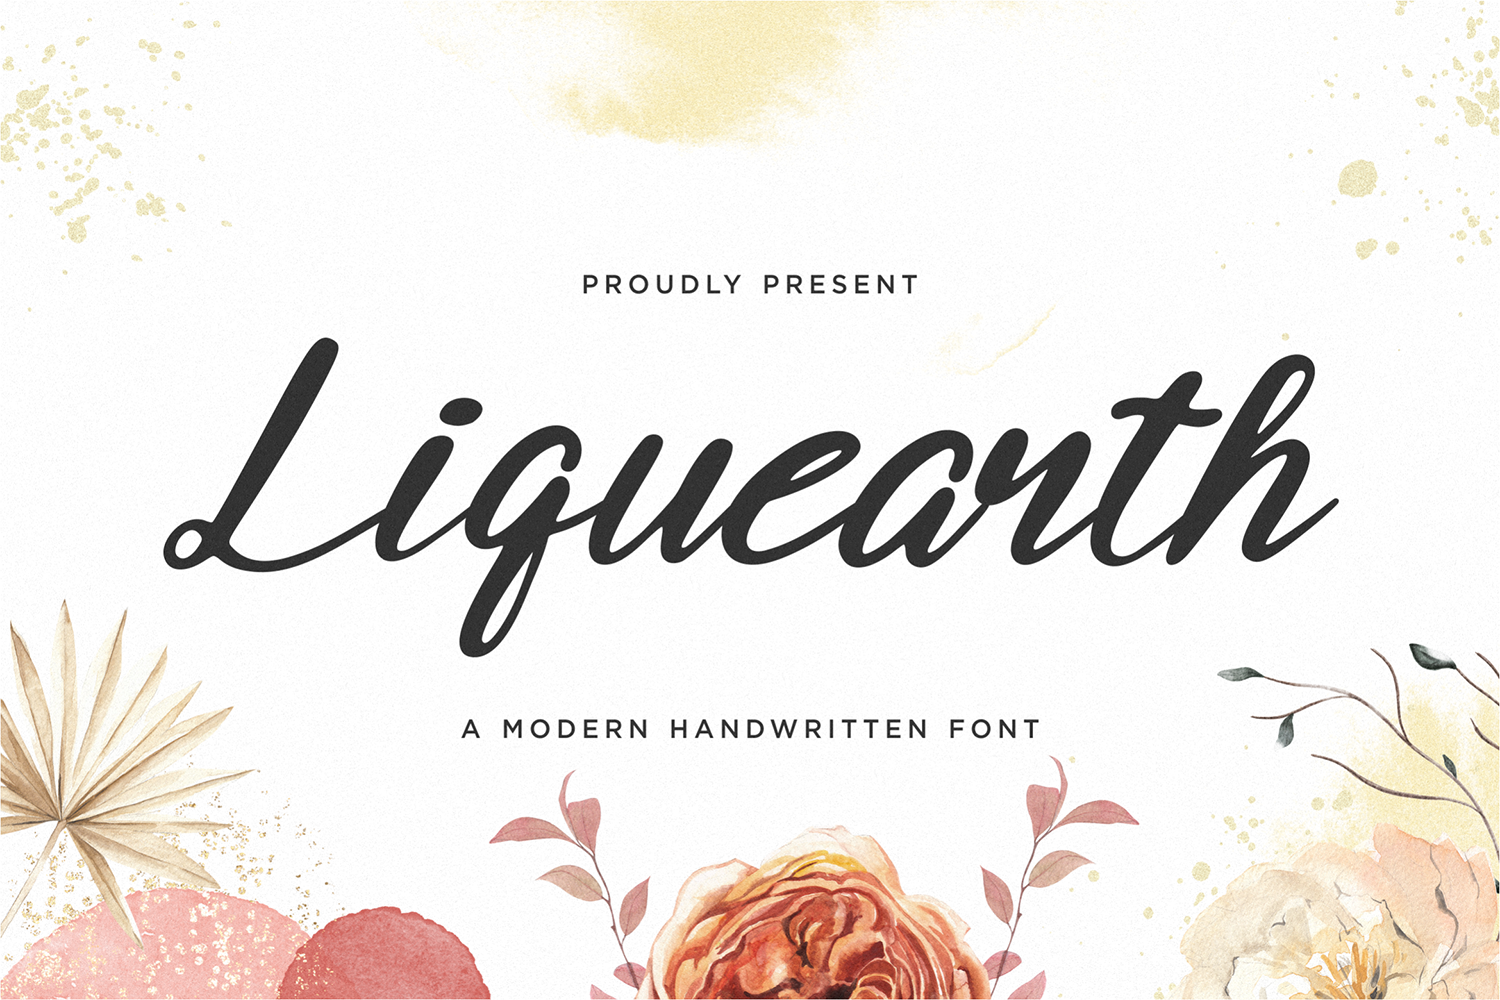 Liquearth Free Font